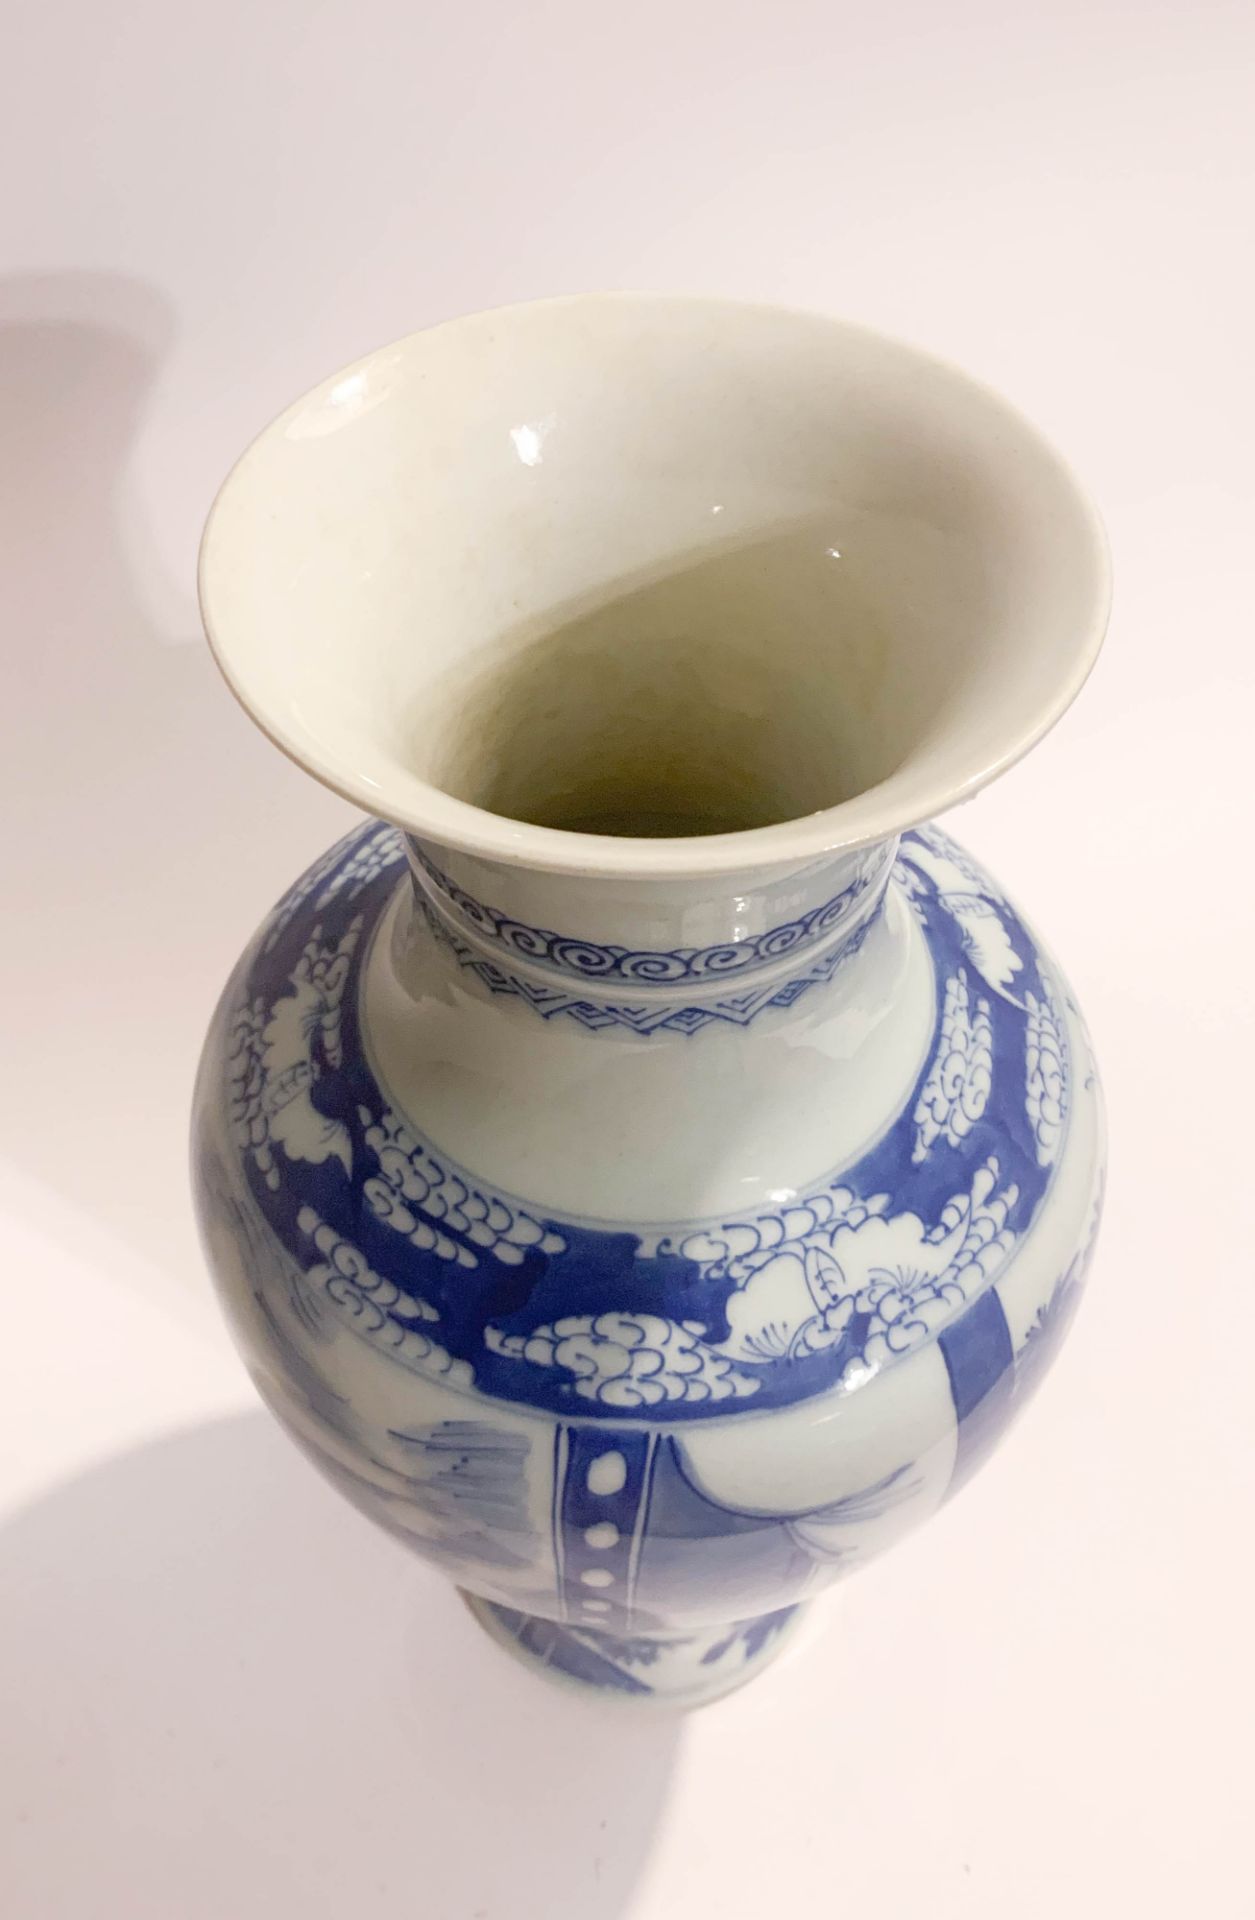  Floor vase China Qing dynasty 19th century - Image 6 of 11